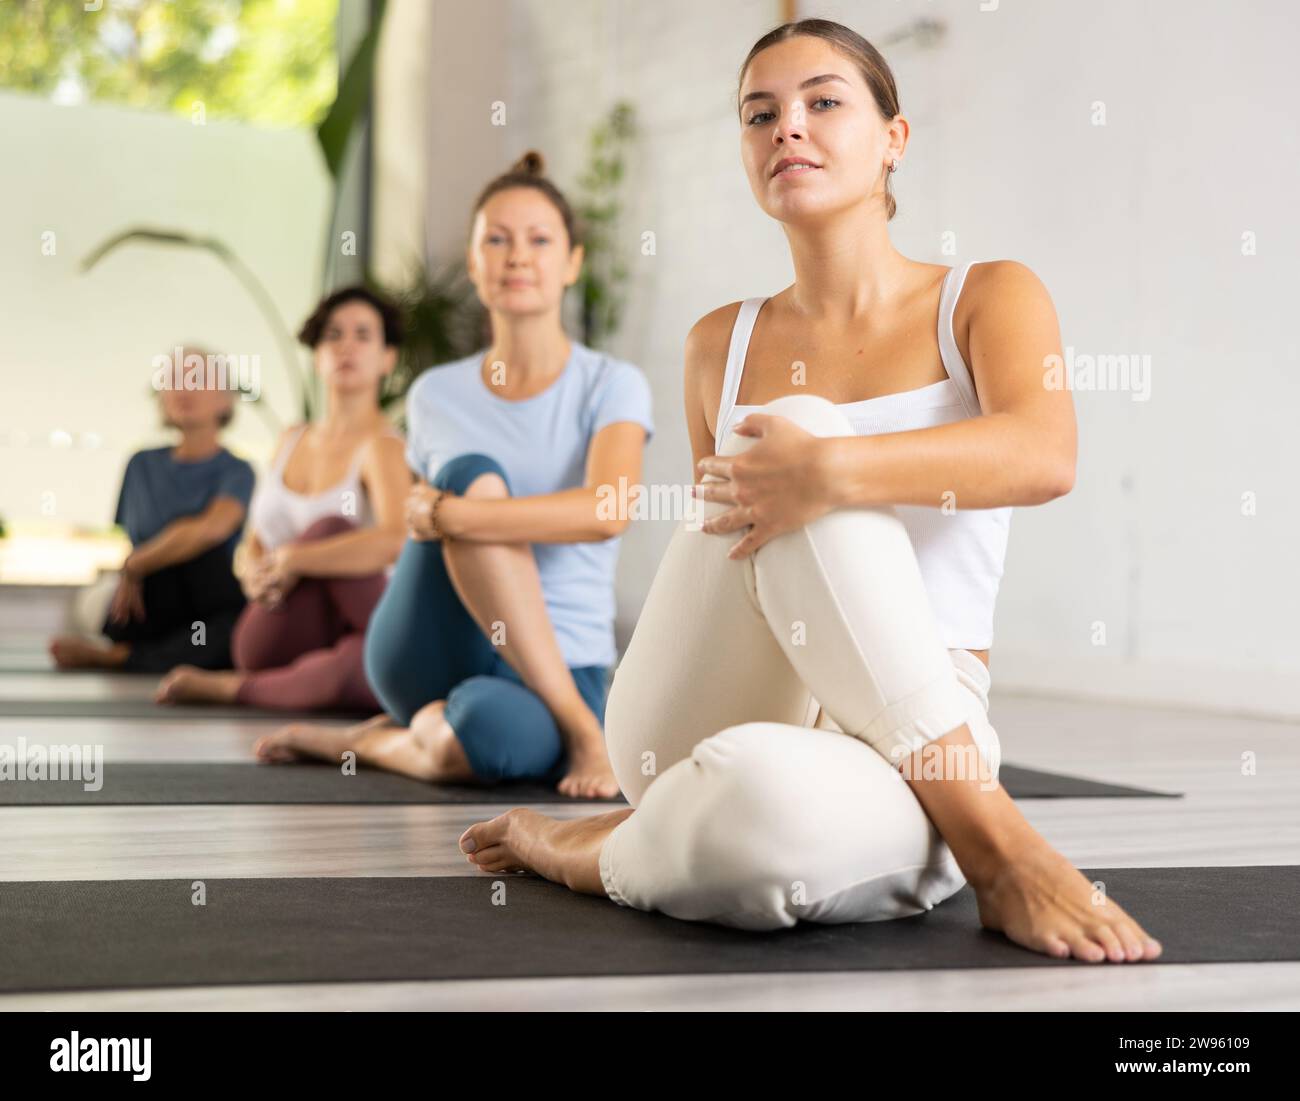 https://c8.alamy.com/comp/2W96109/calm-female-gym-visitor-twisting-in-ardha-matsyendrasana-pose-during-group-yoga-training-2W96109.jpg